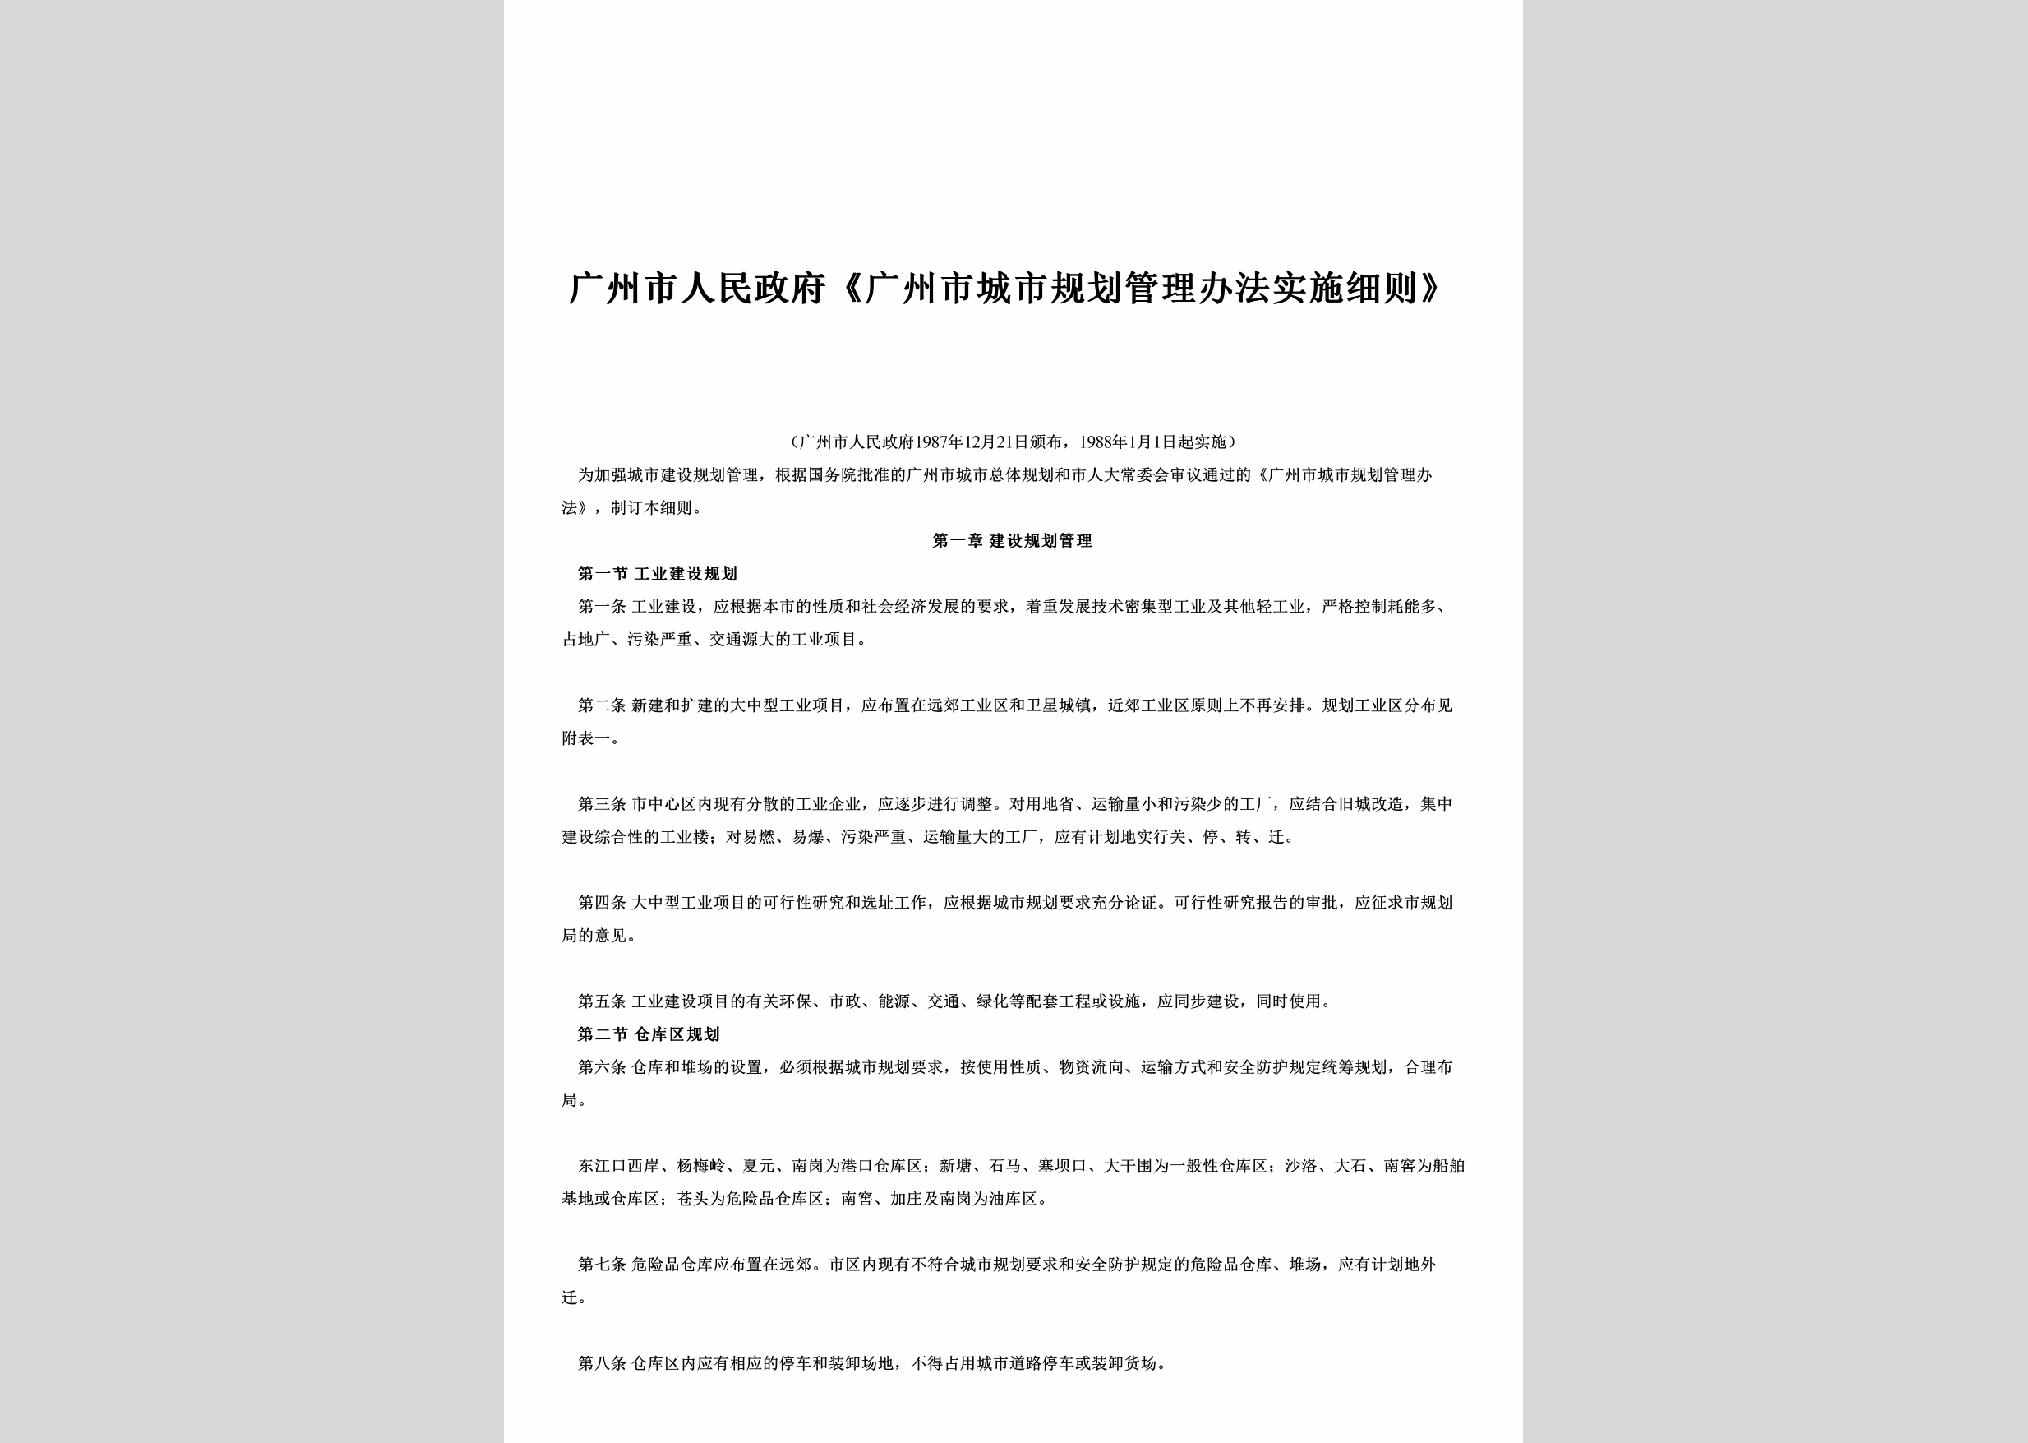 GD-CSGHZZXZ-1988：《广州市城市规划管理办法实施细则》